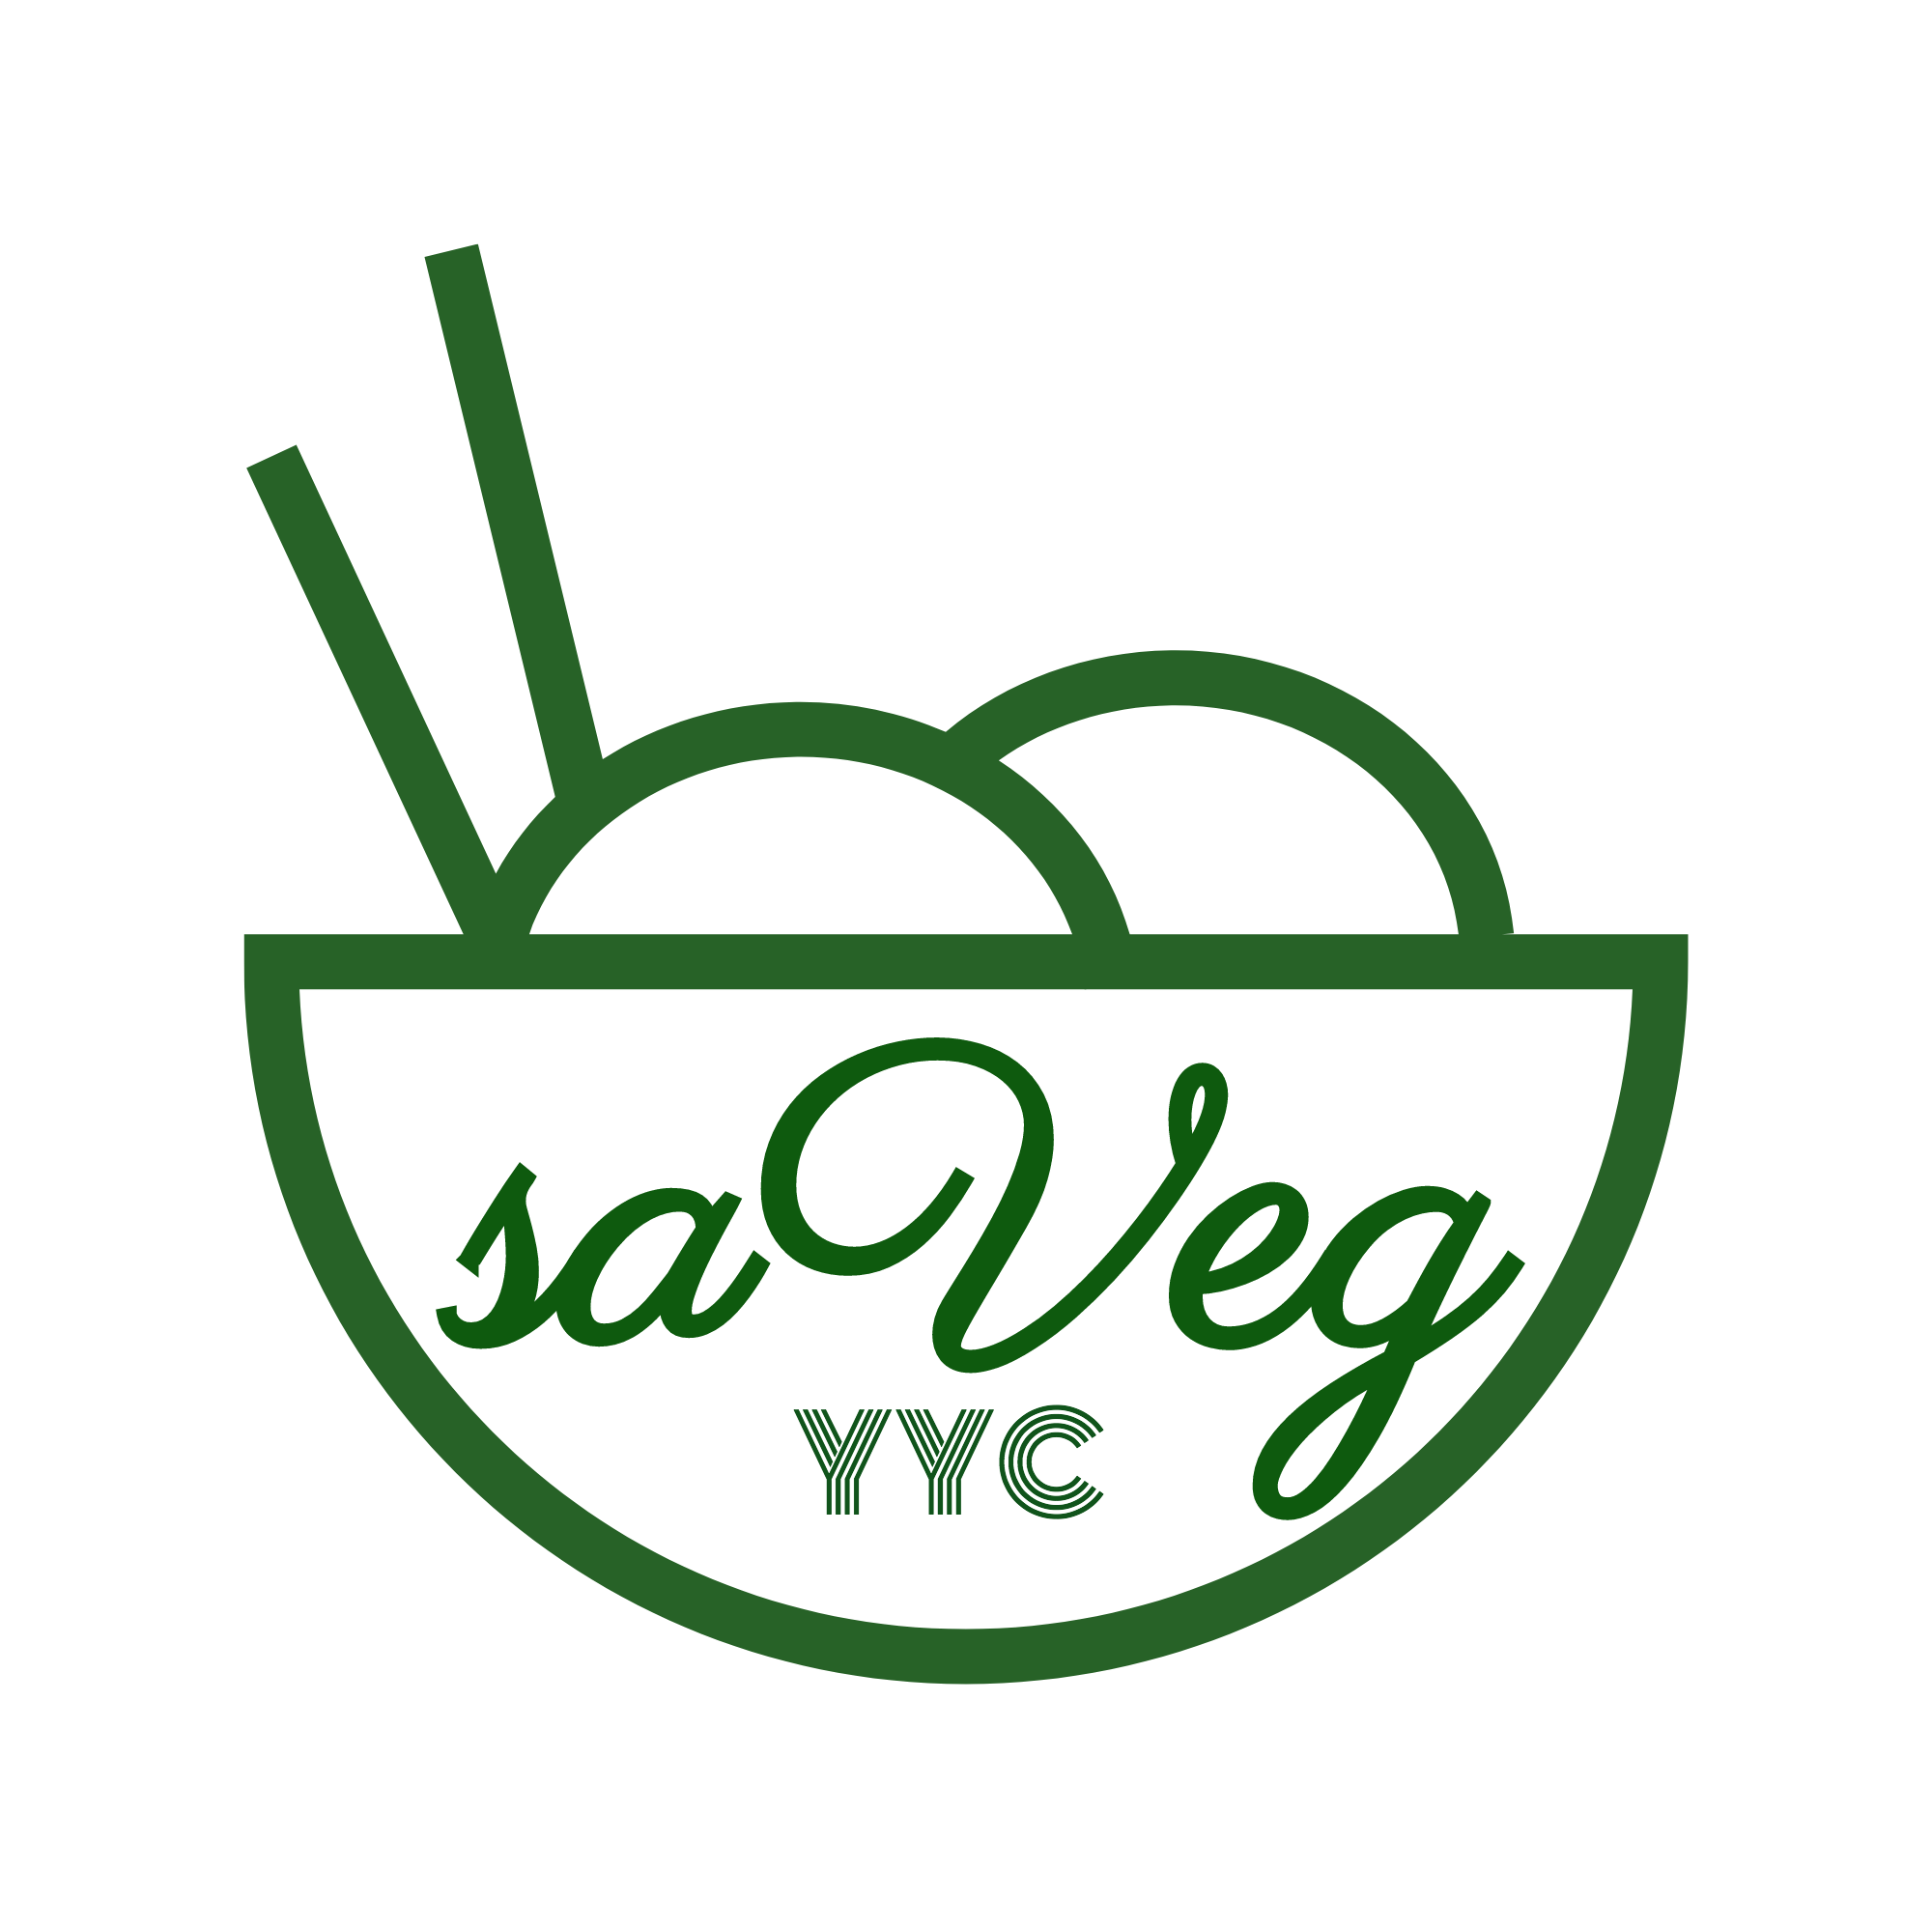 saVeg Cafe YYC